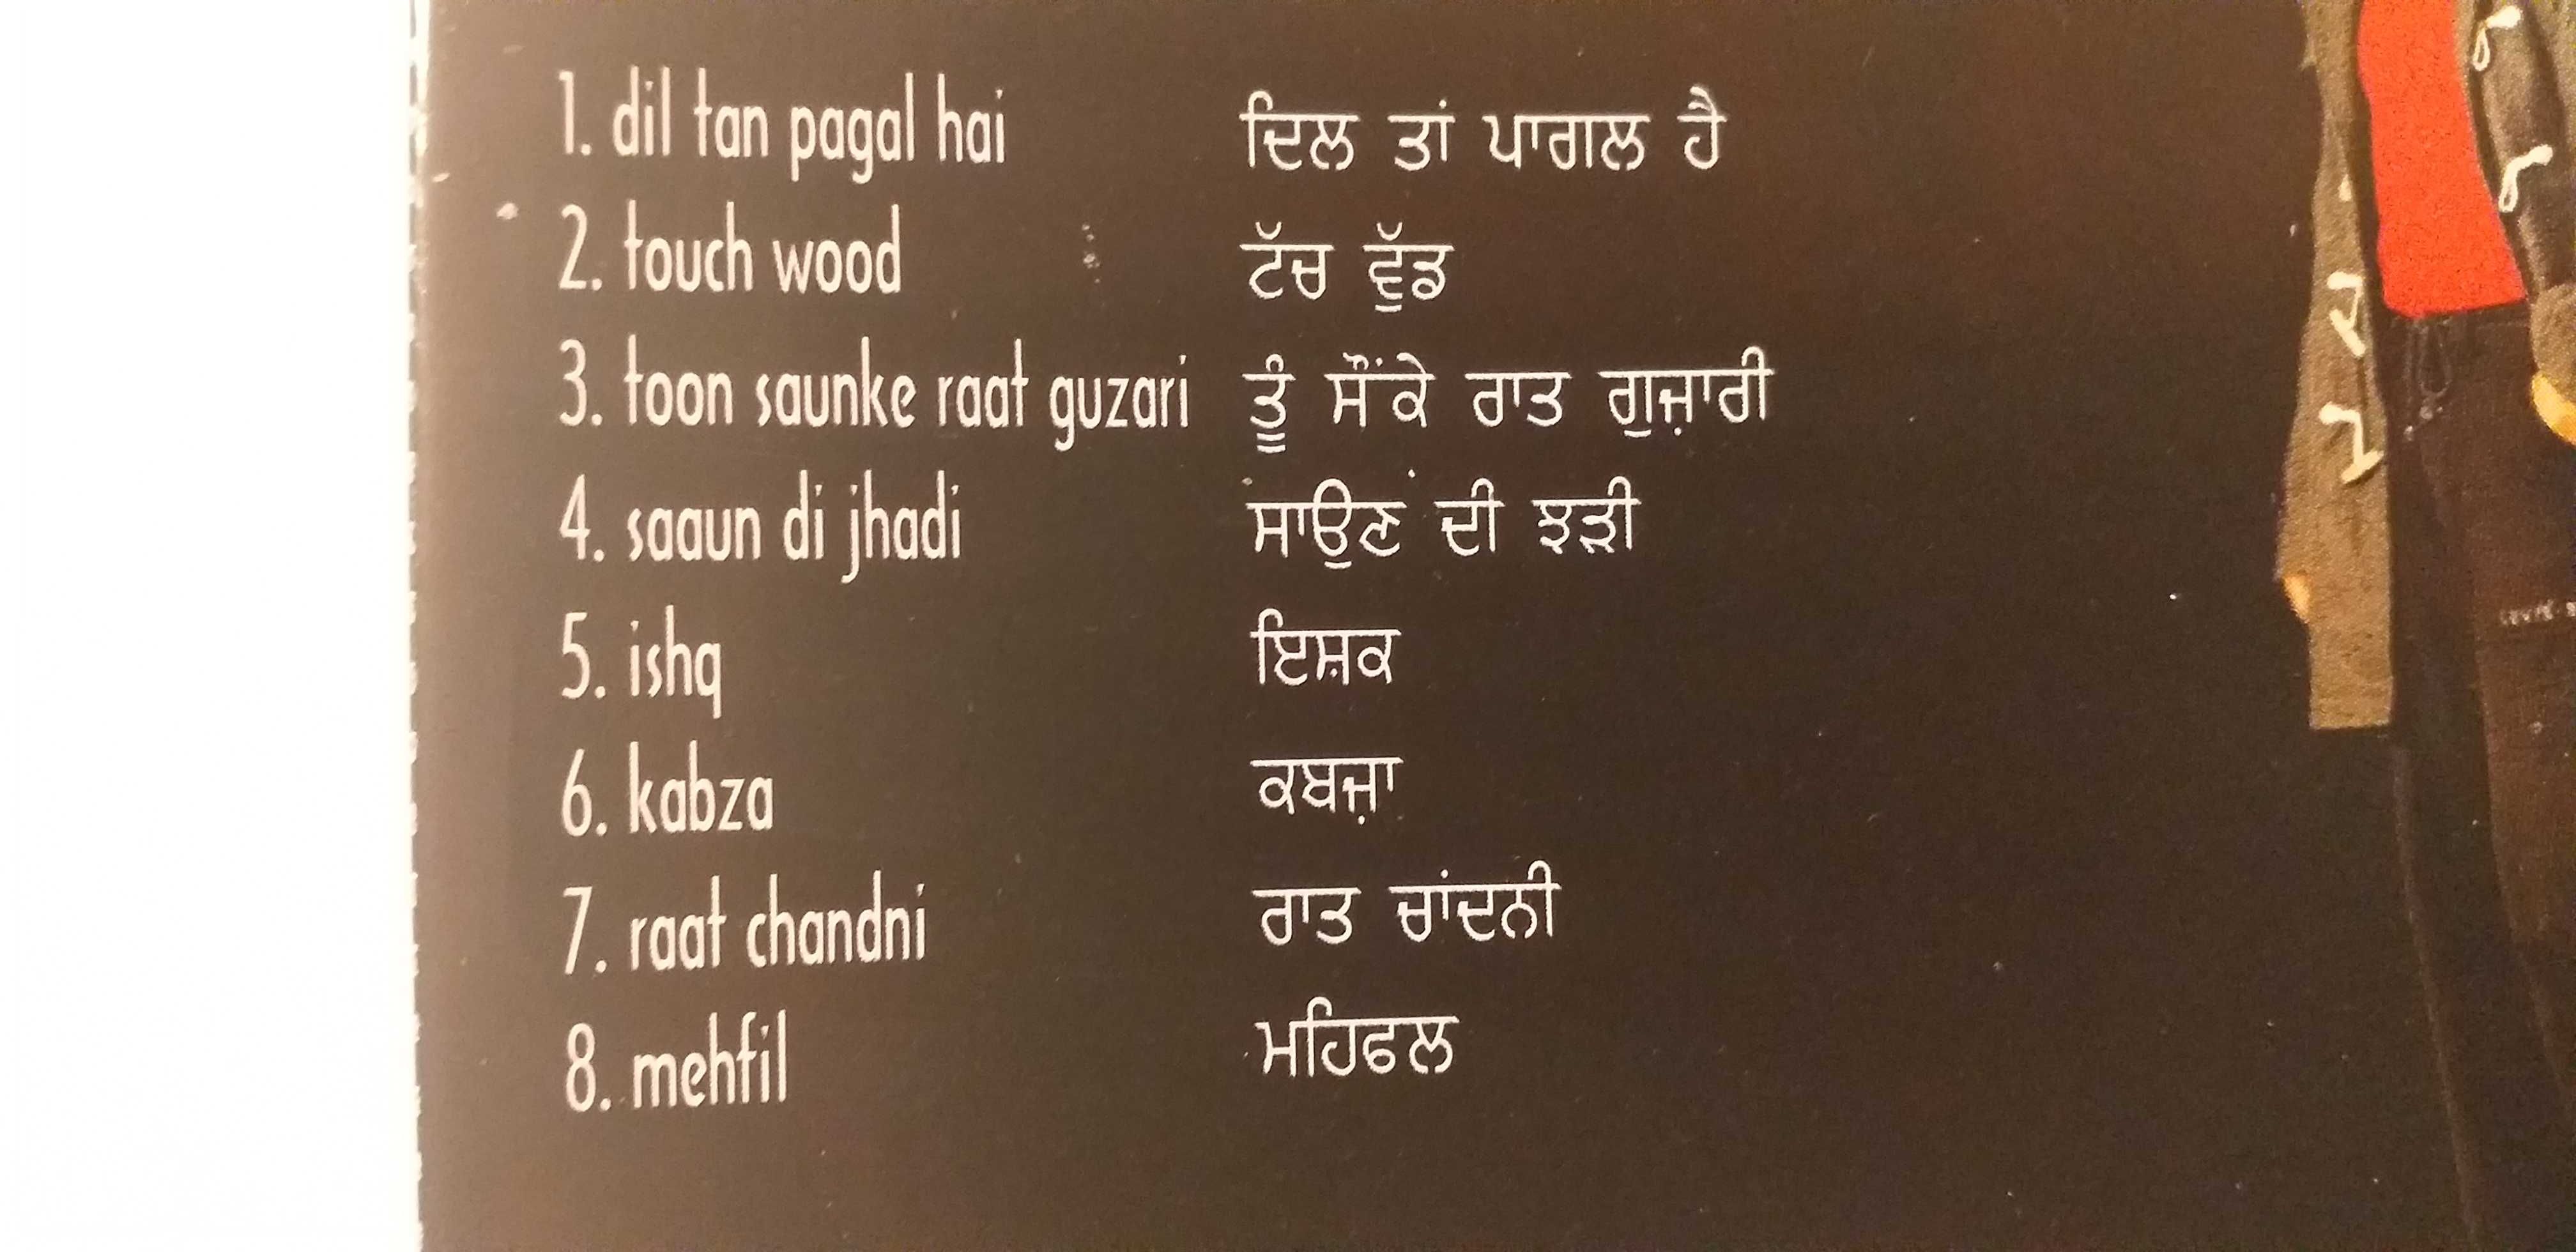 Babbu Maan - " Saaun Di Jhadi " - CD - India - portes incluidos